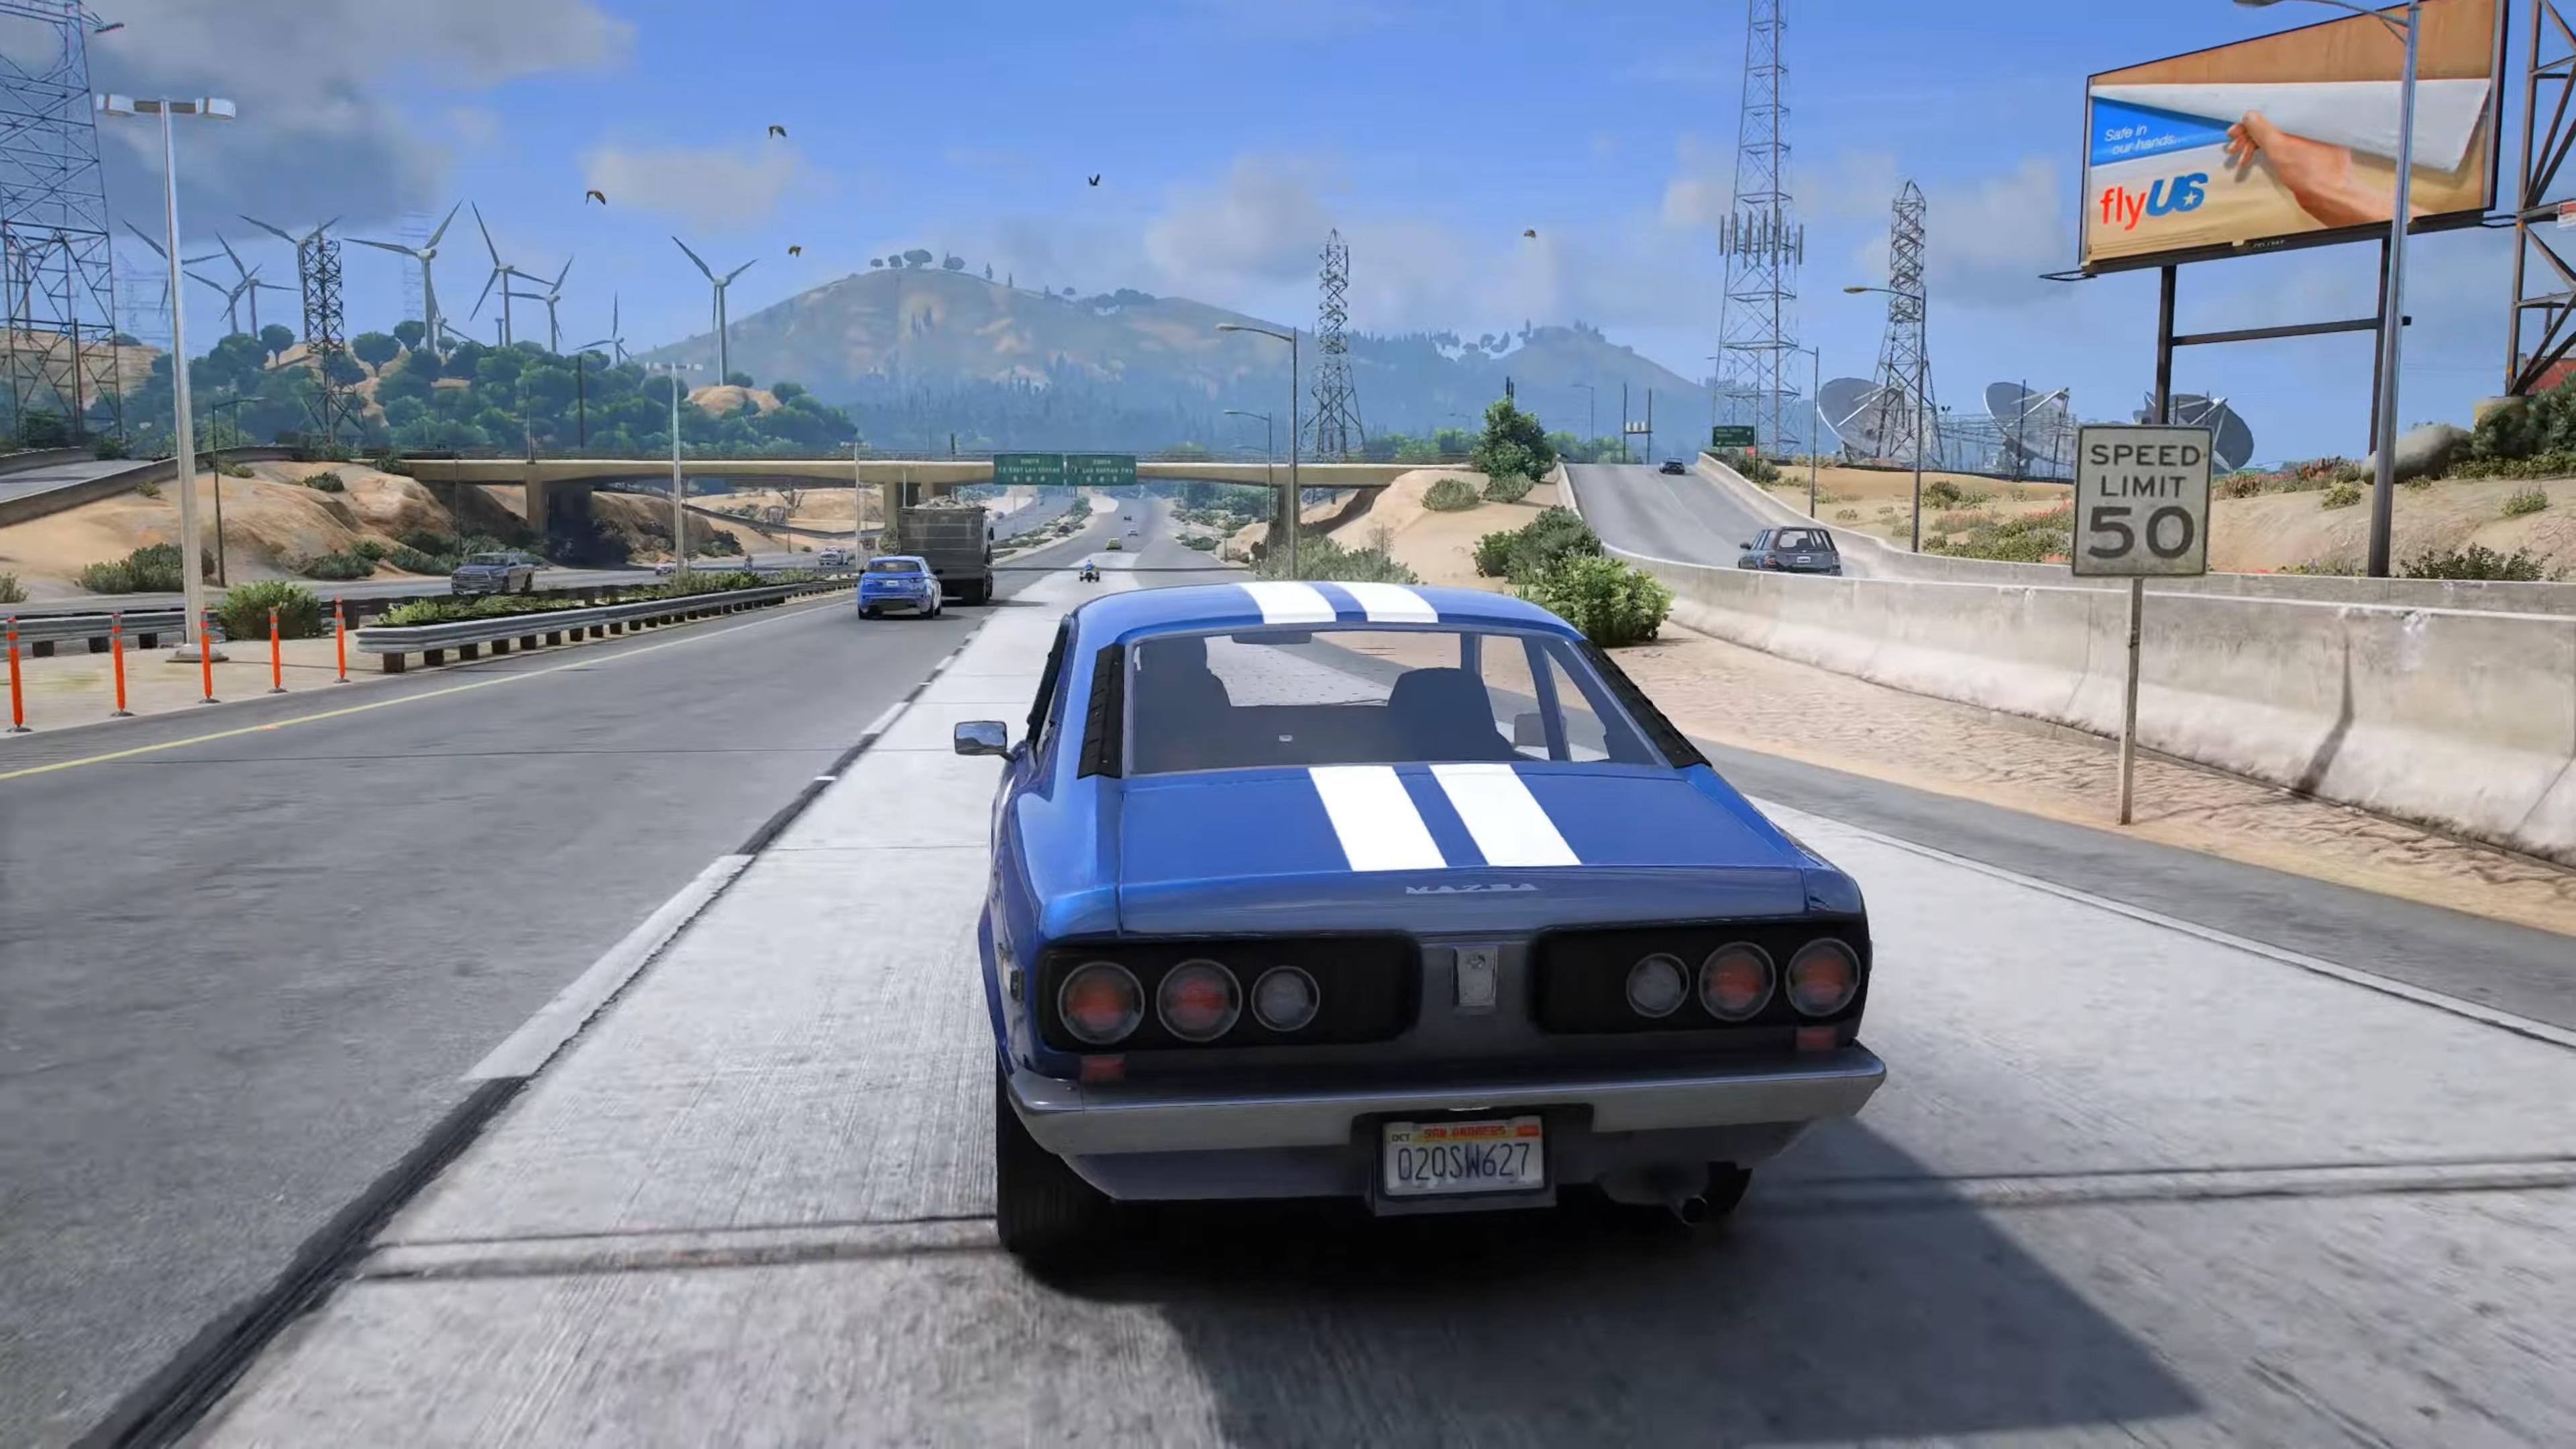 Screenshot 1 of कार ड्राइविंग ओपन वर्ल्ड गेम्स 0.7